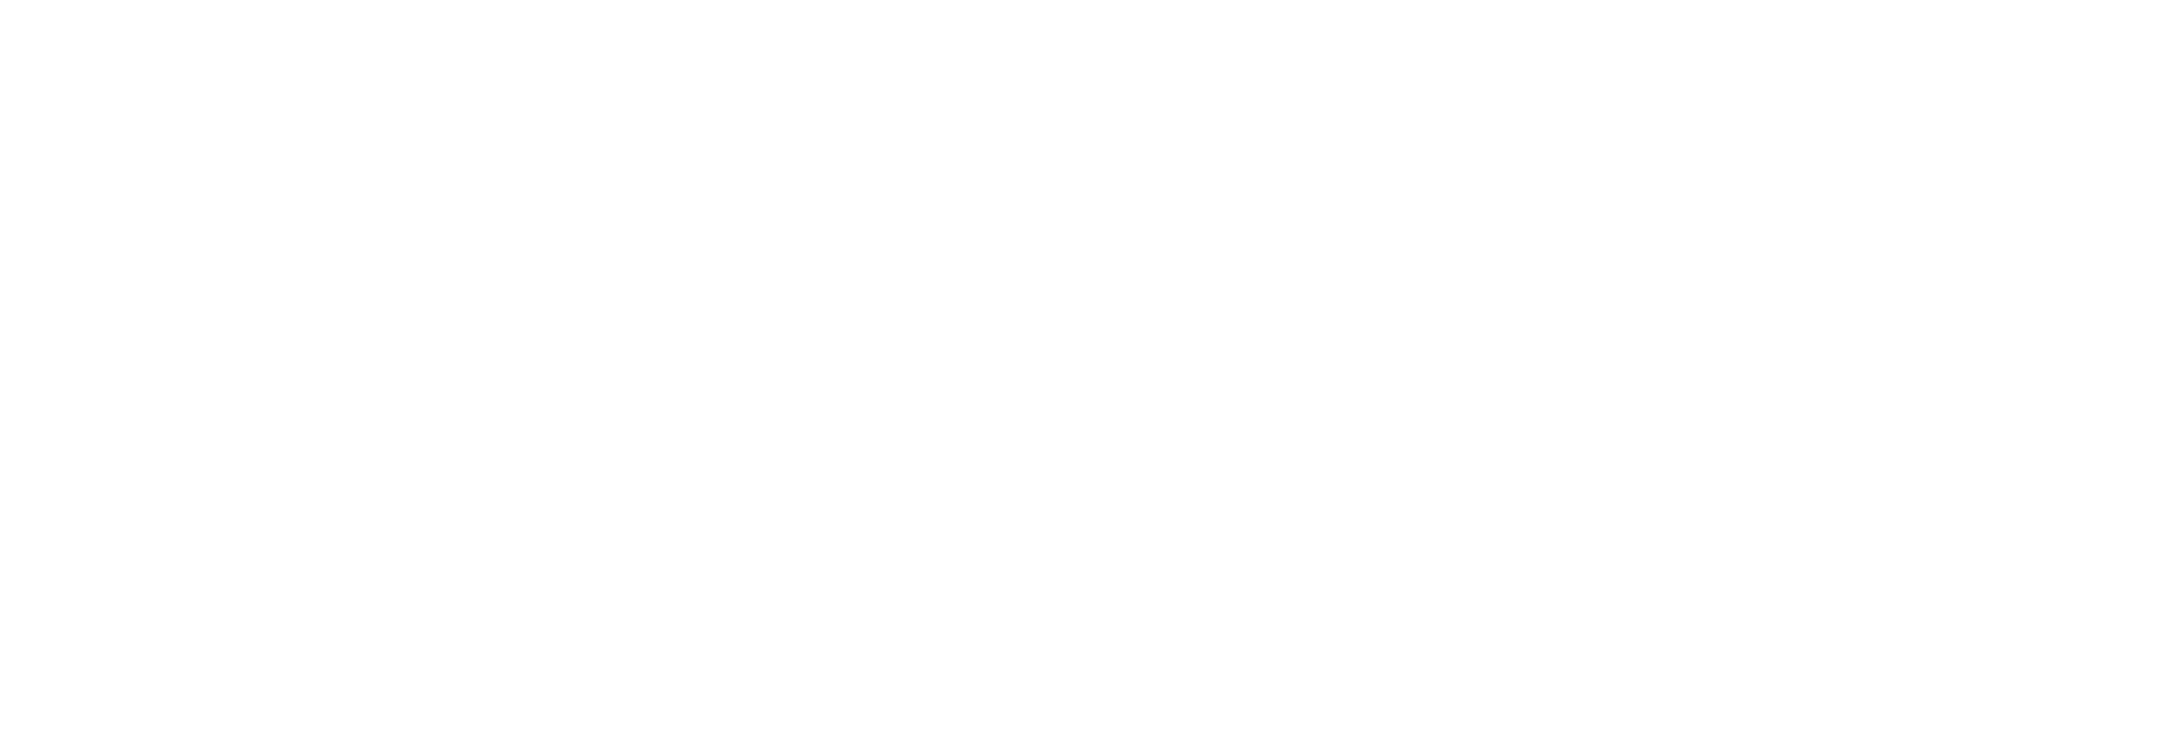 Slingshot Simulations White logo 1